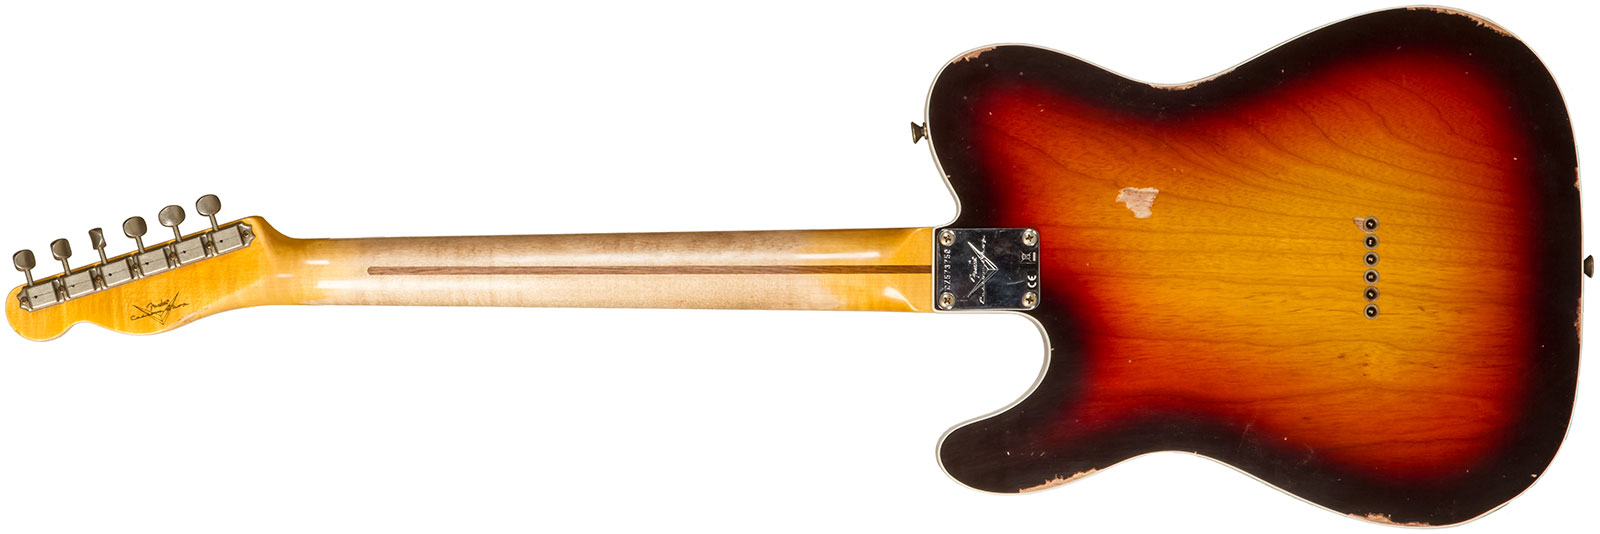 Fender Custom Shop Tele Custom 1959 2s Ht Mn #cz573750 - Relic Chocolate 3-color Sunburst - Tel shape electric guitar - Variation 1